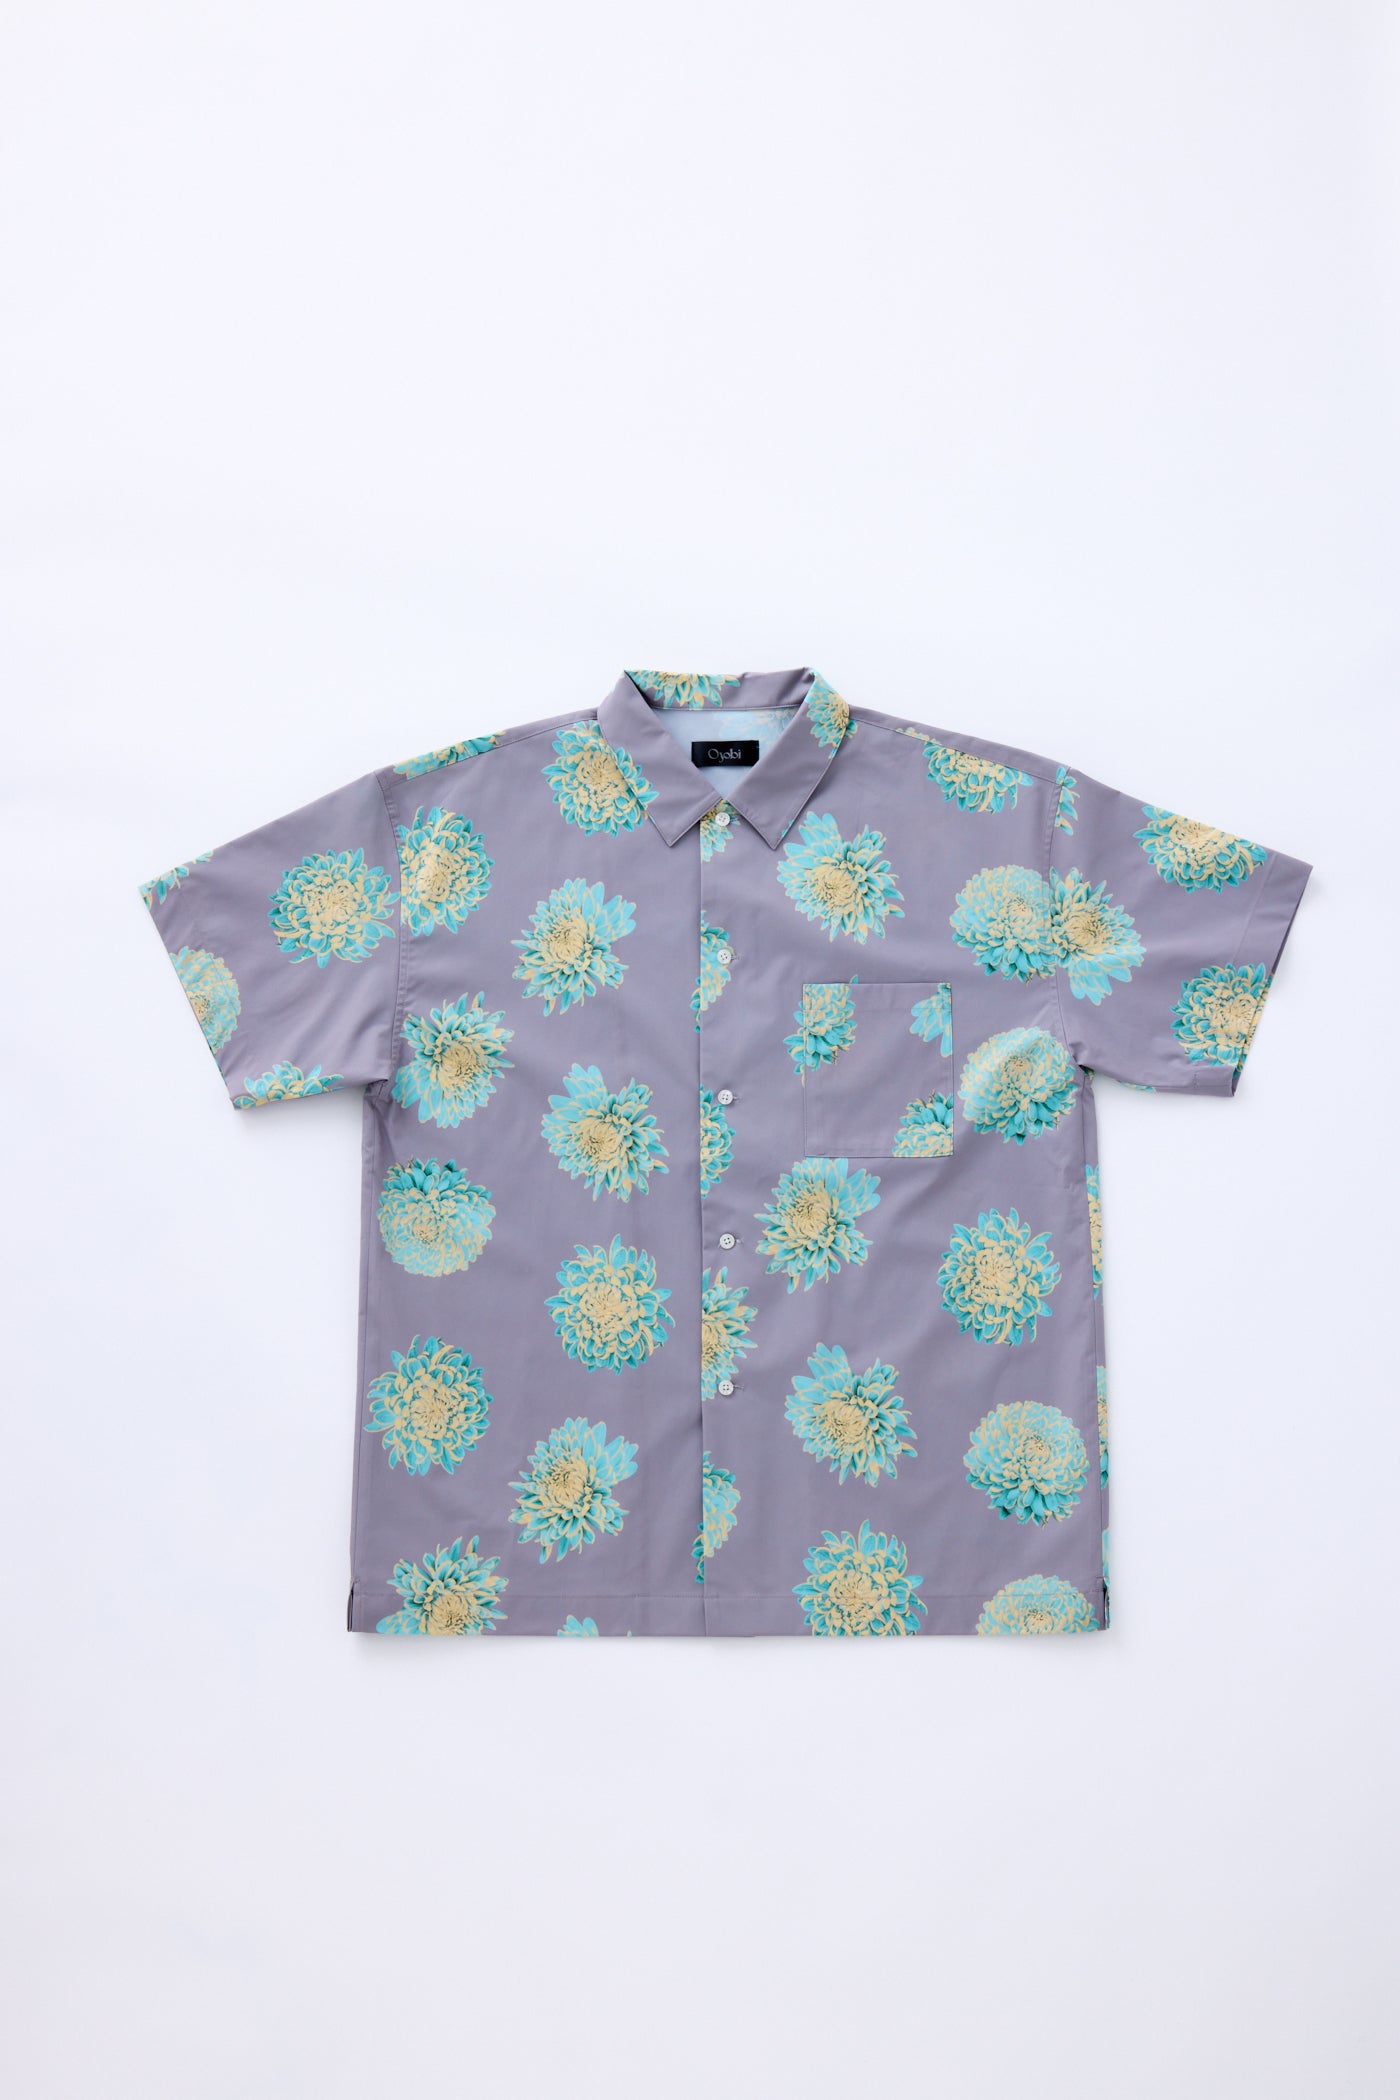 Flower Print S/S Shirt (M)